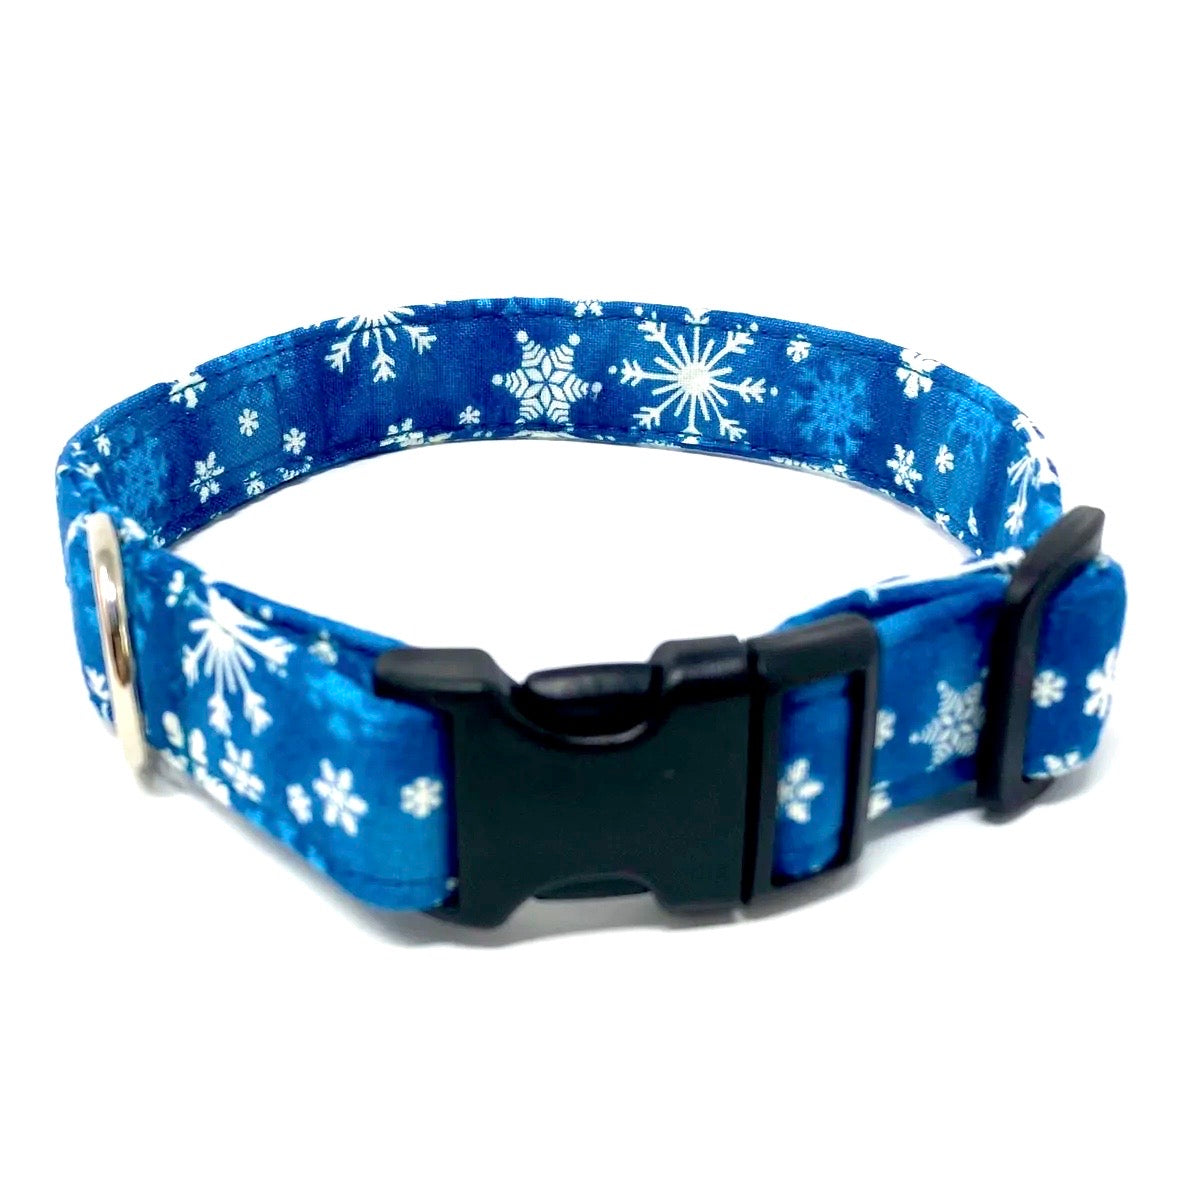 Let It Snow Blue Dog Collar